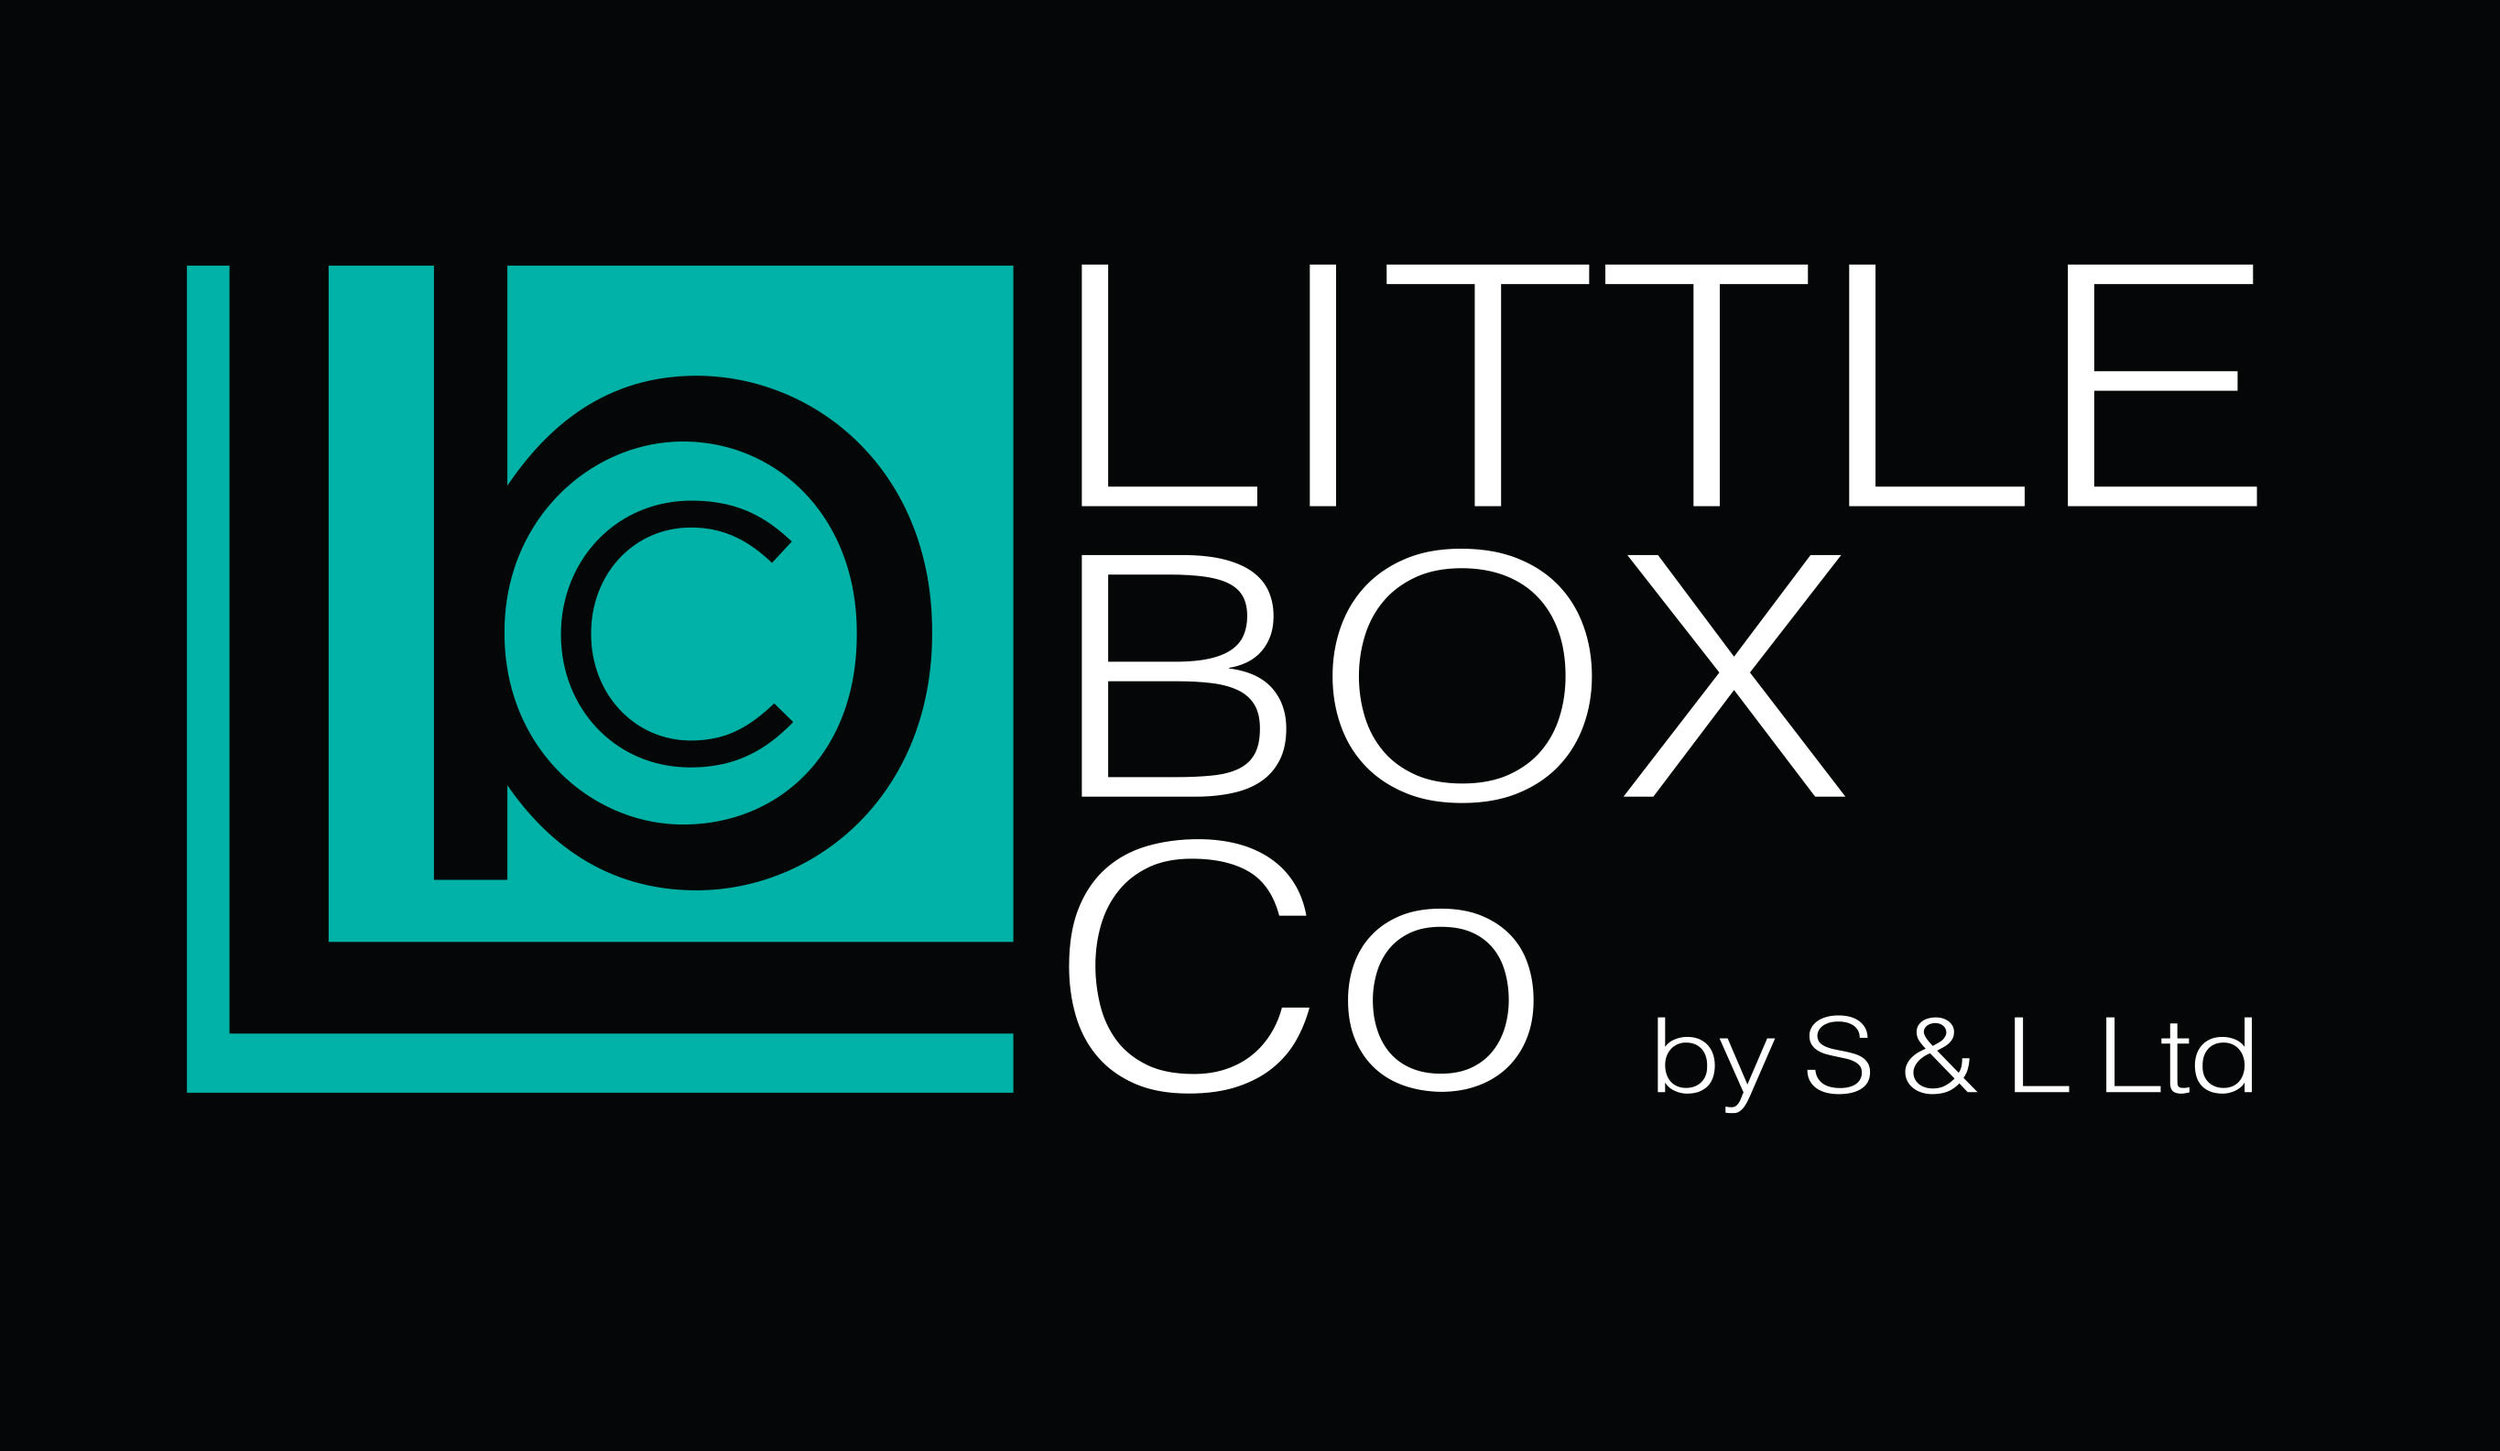 LITTLE BOX COMPANY